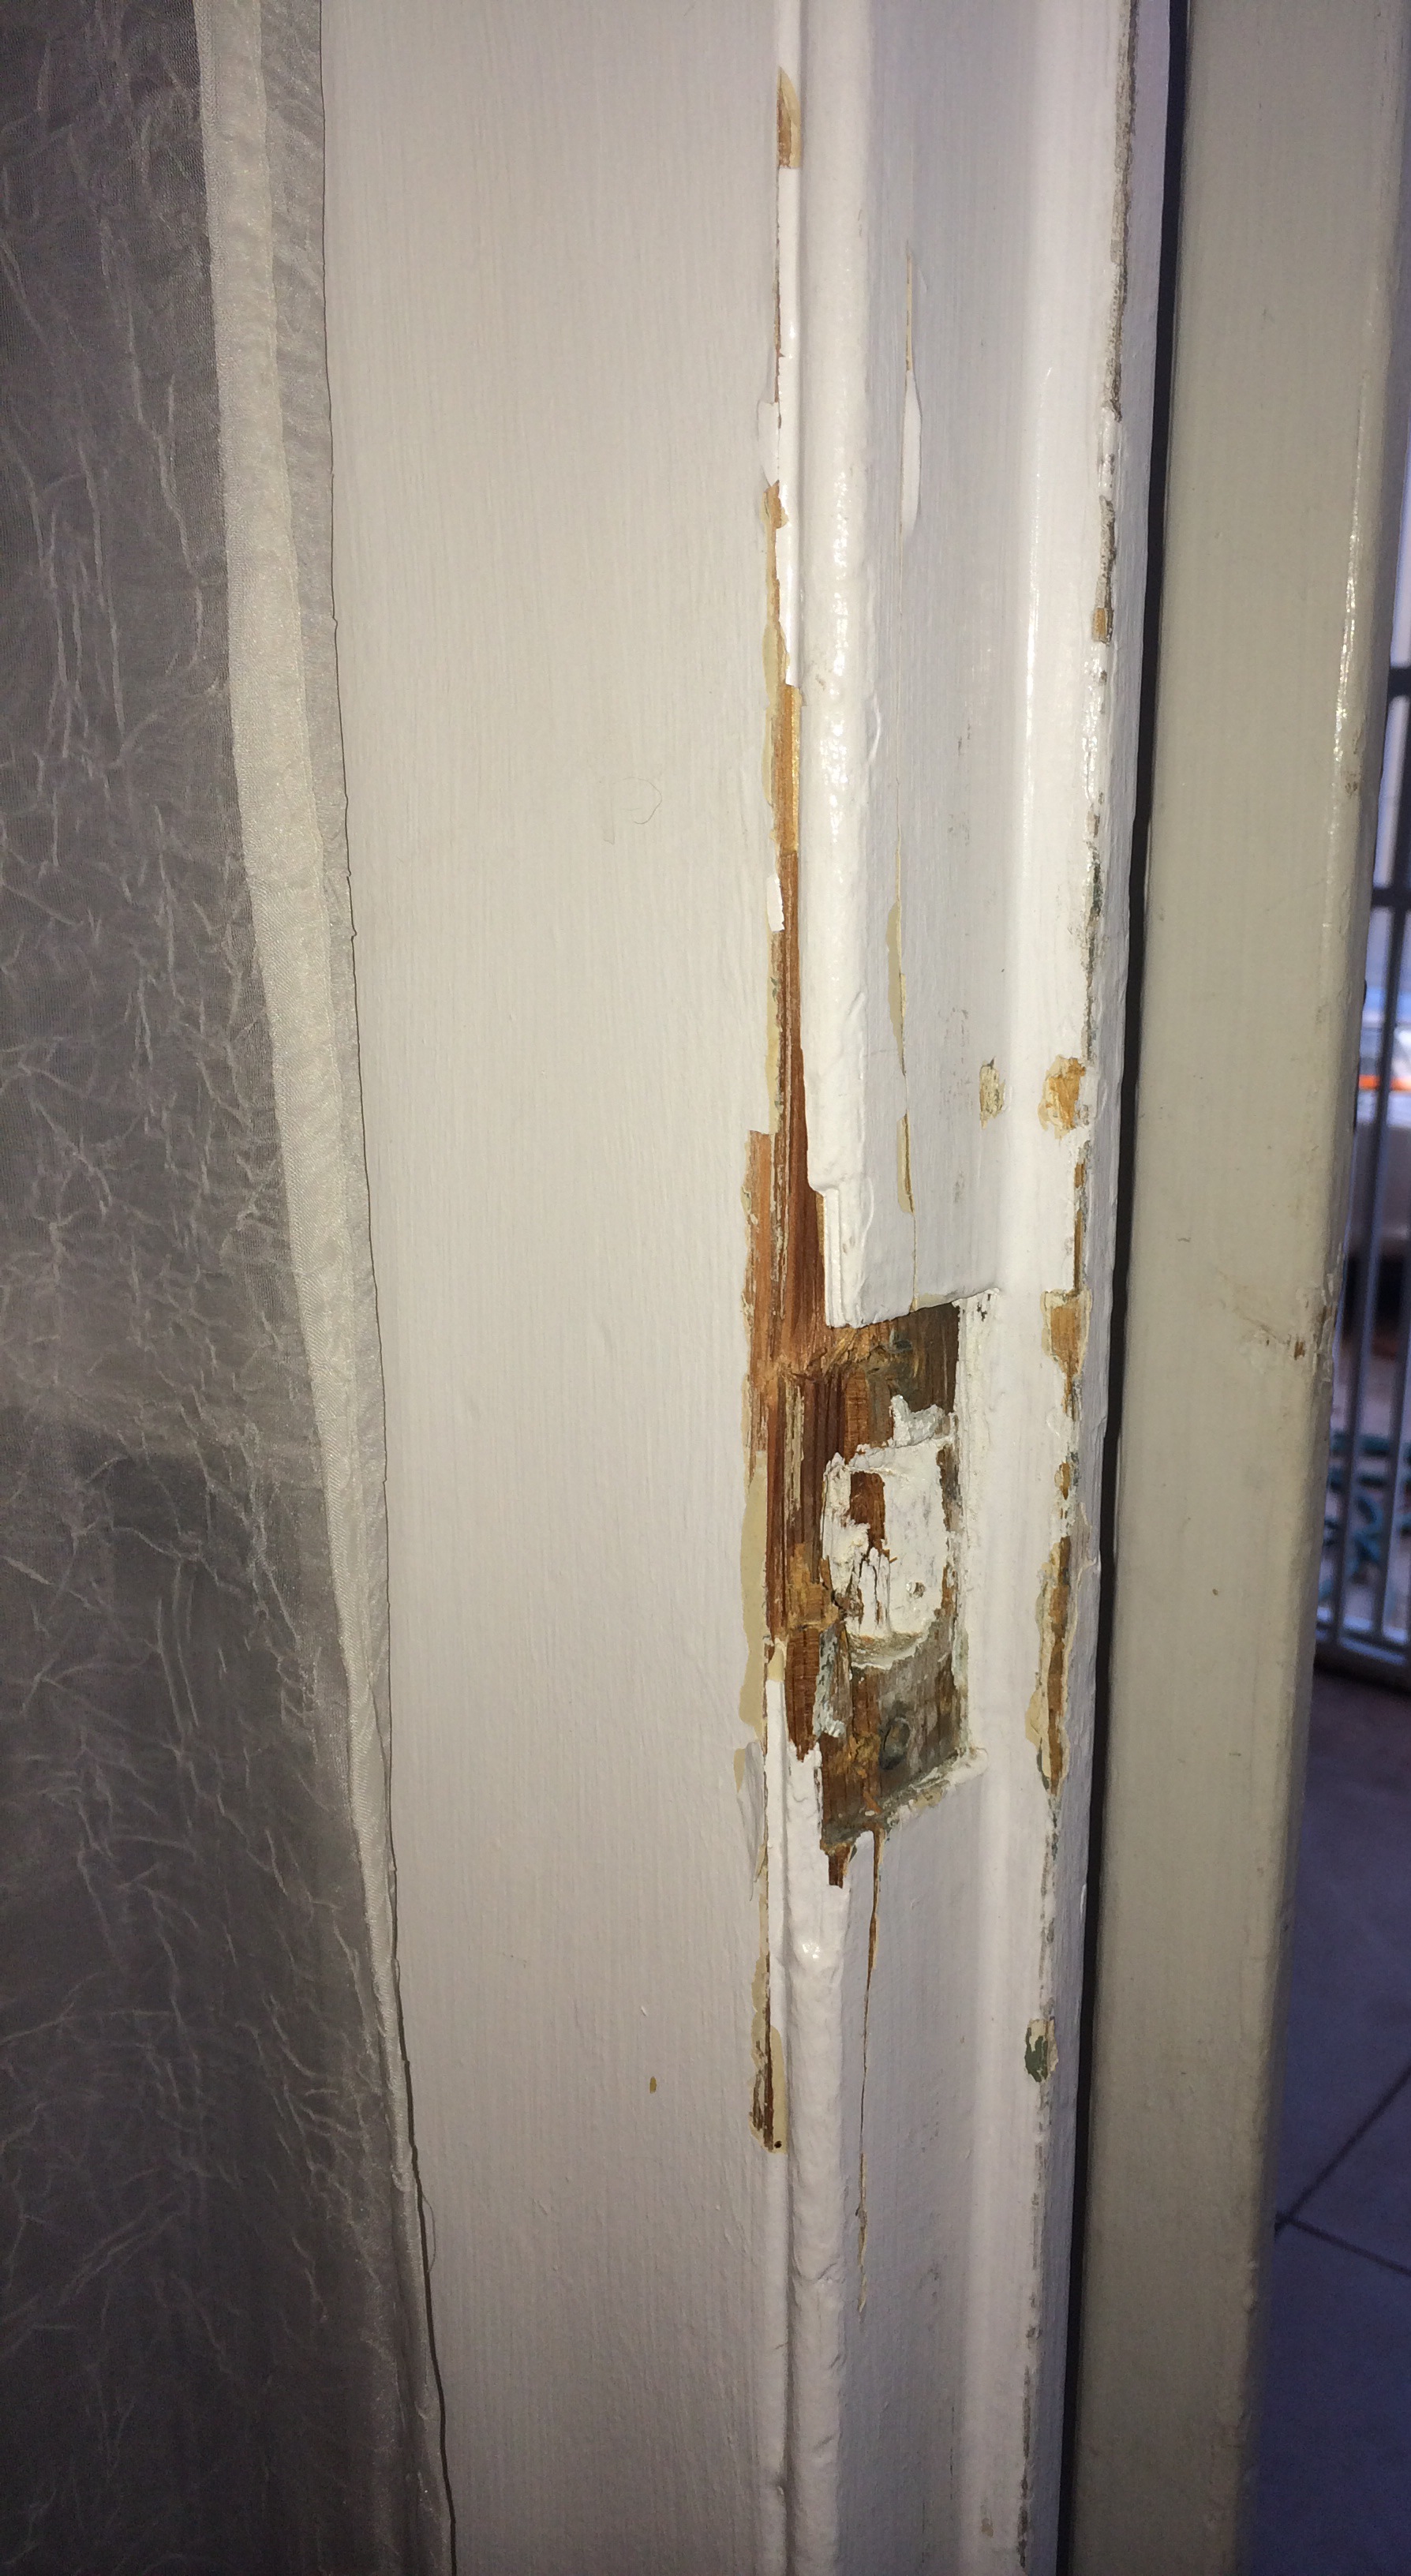 Damage done by locksmith technician Spencer Walden 916-706-8785.